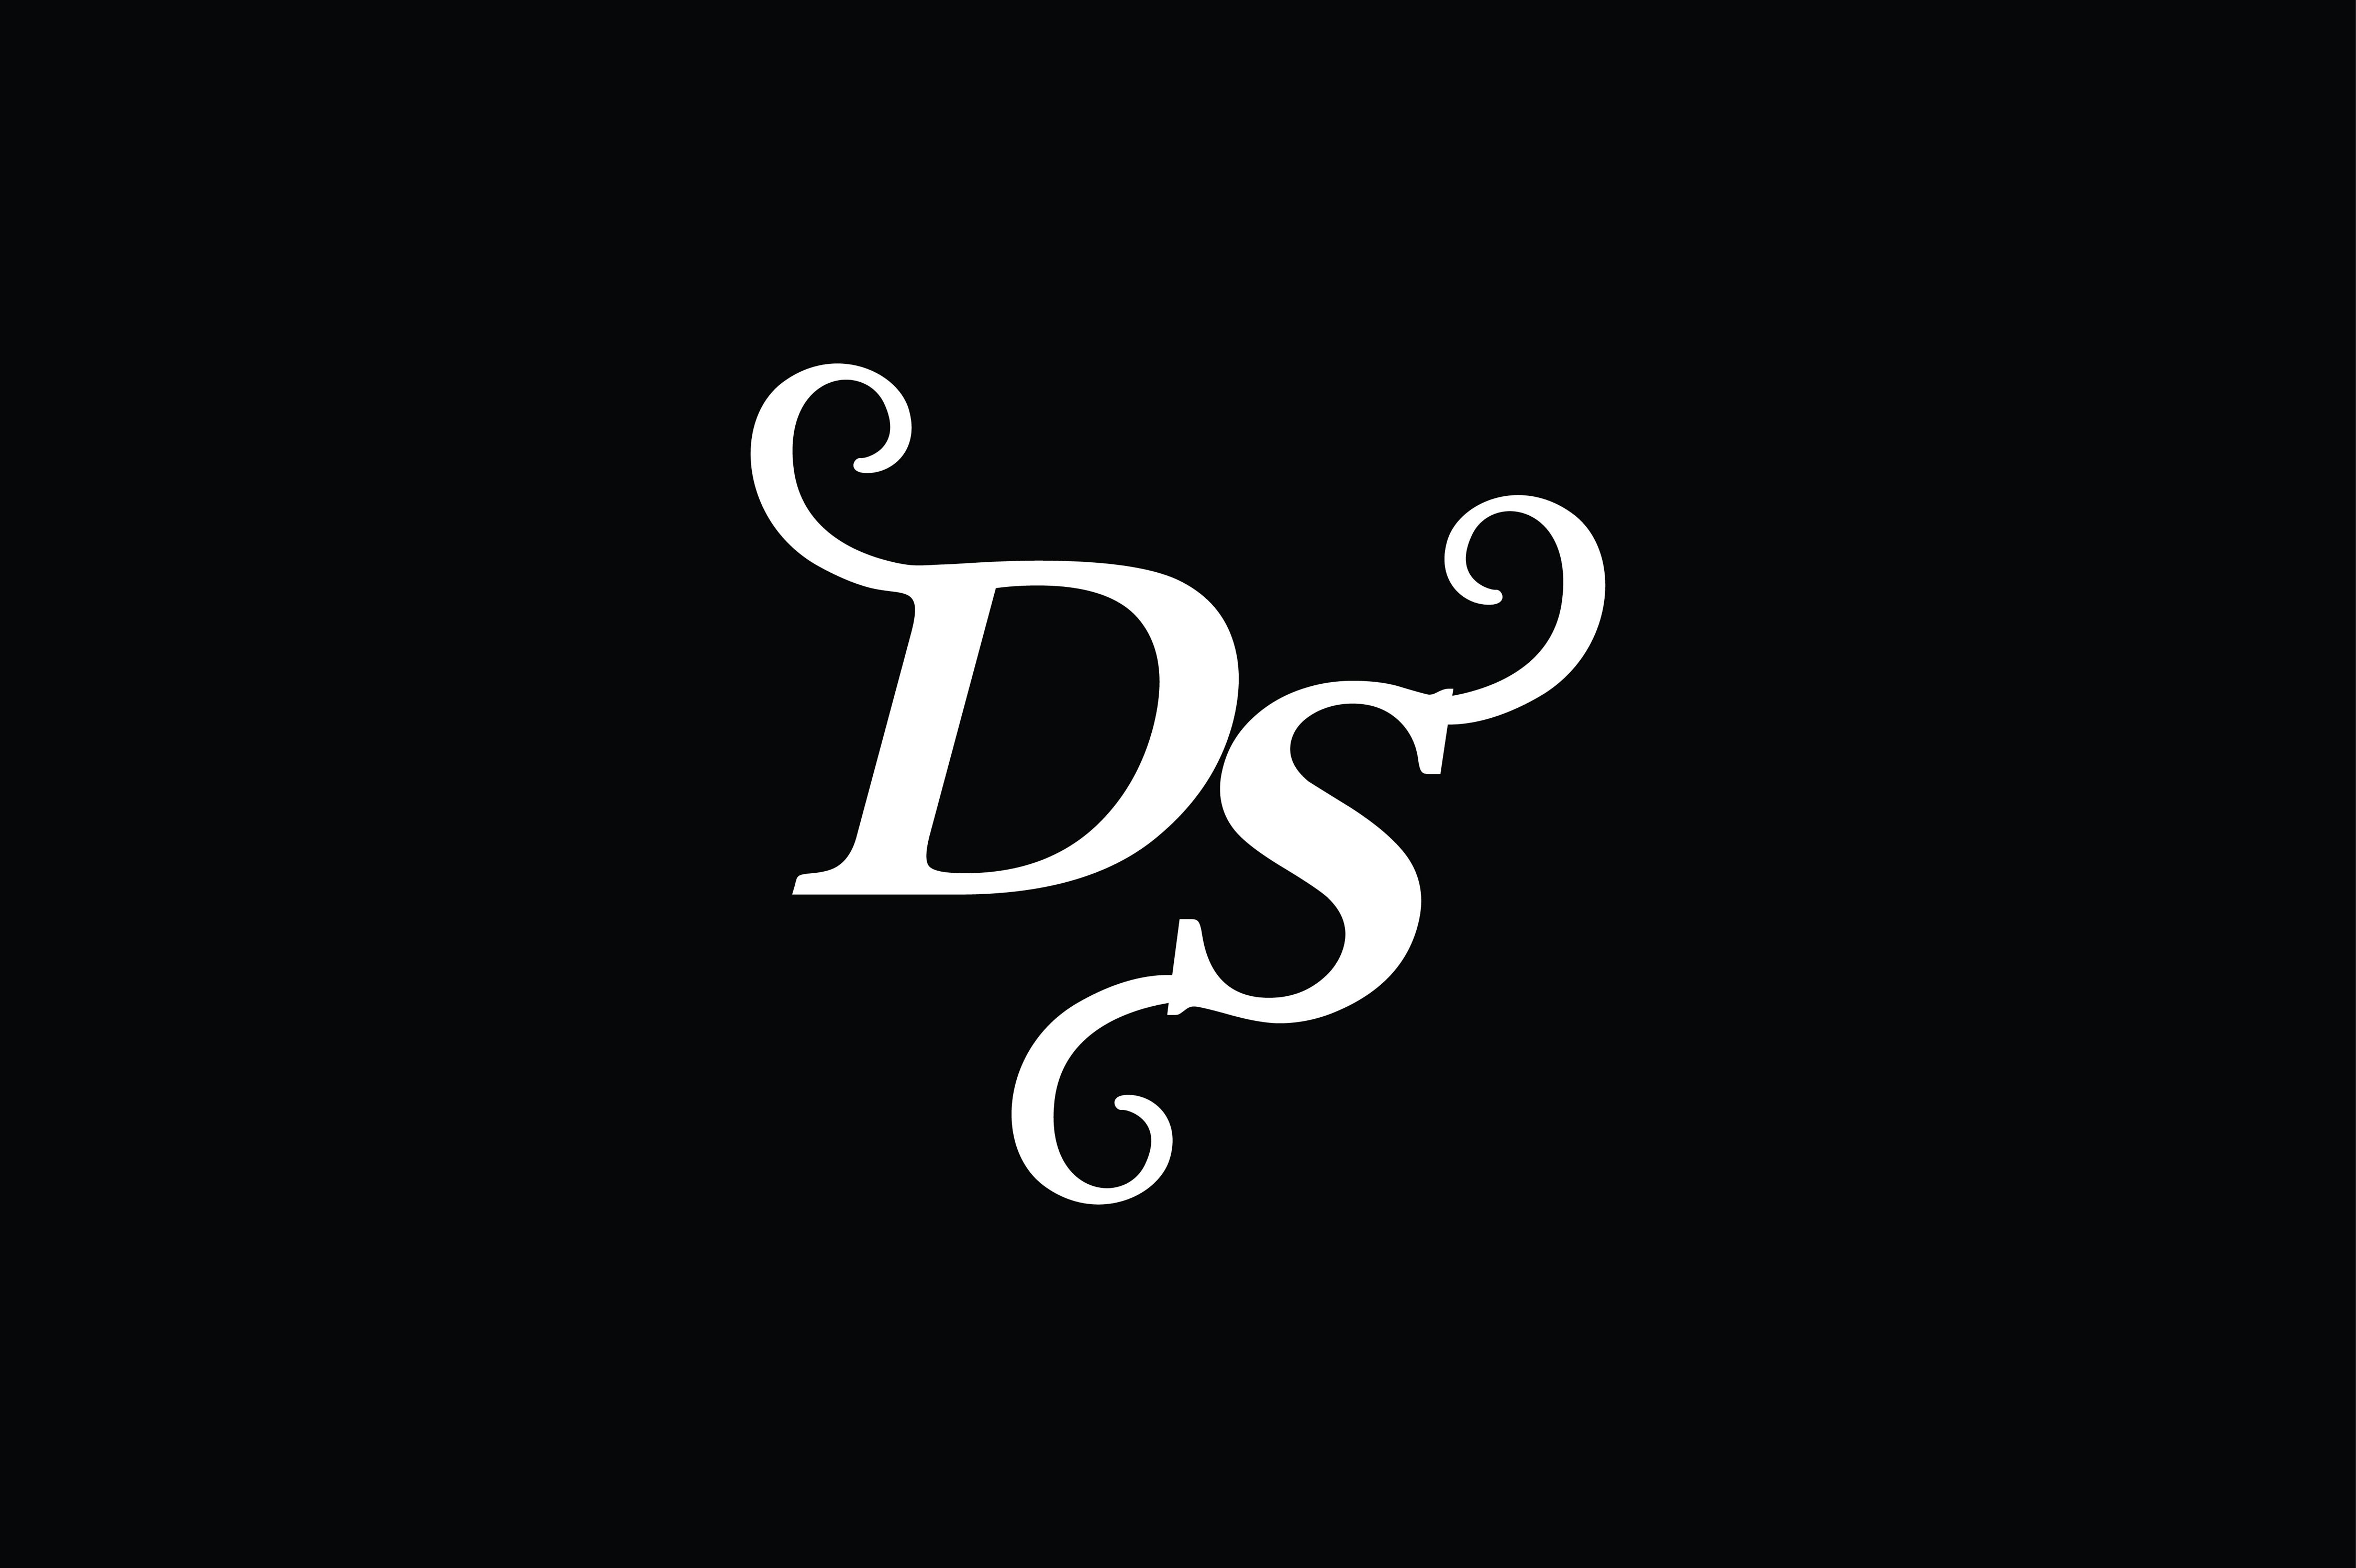 Monogram DS Logo V2 Graphic by Greenlines Studios · Creative Fabrica